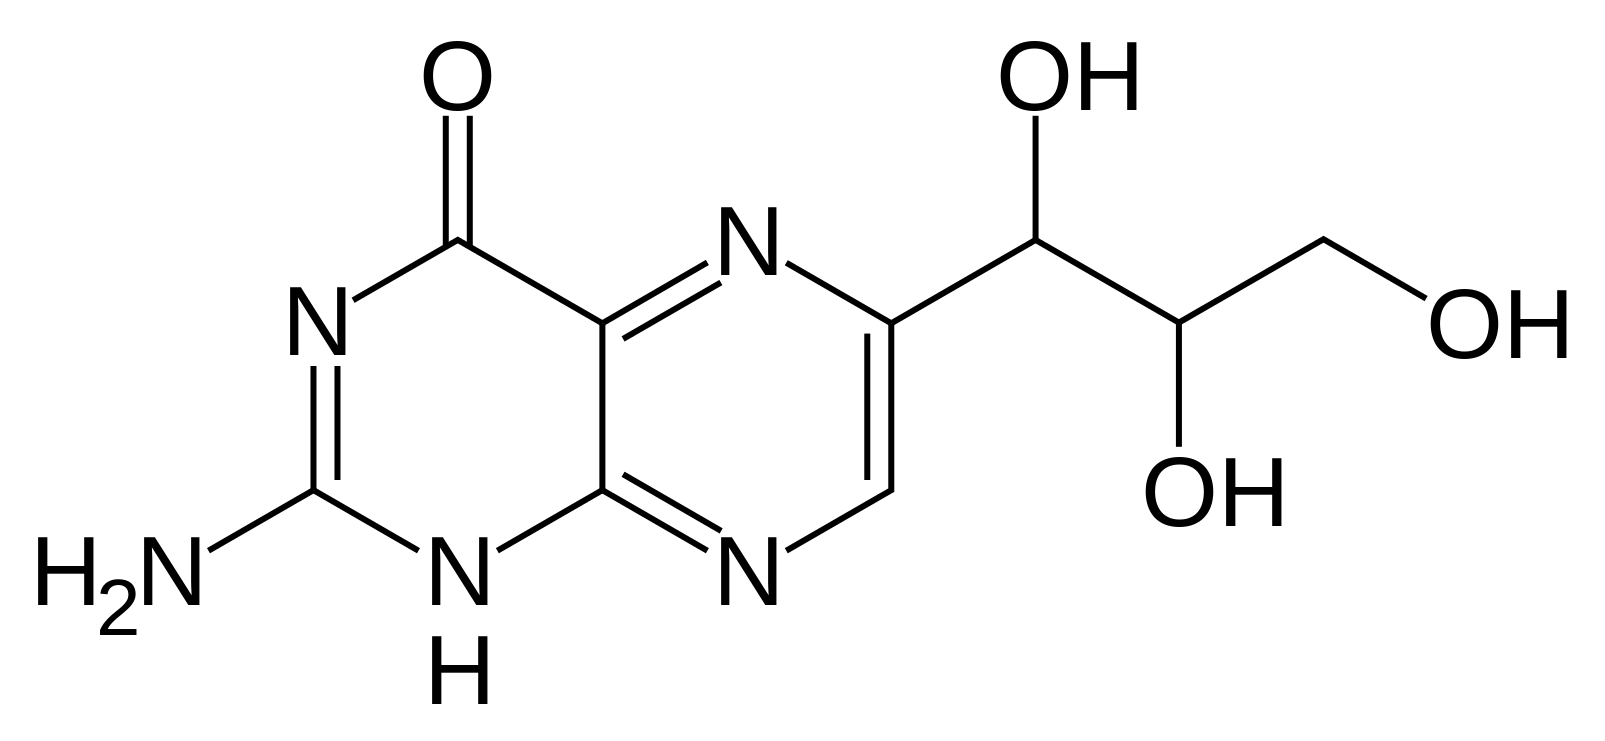 Skeletal formula of neopterin.